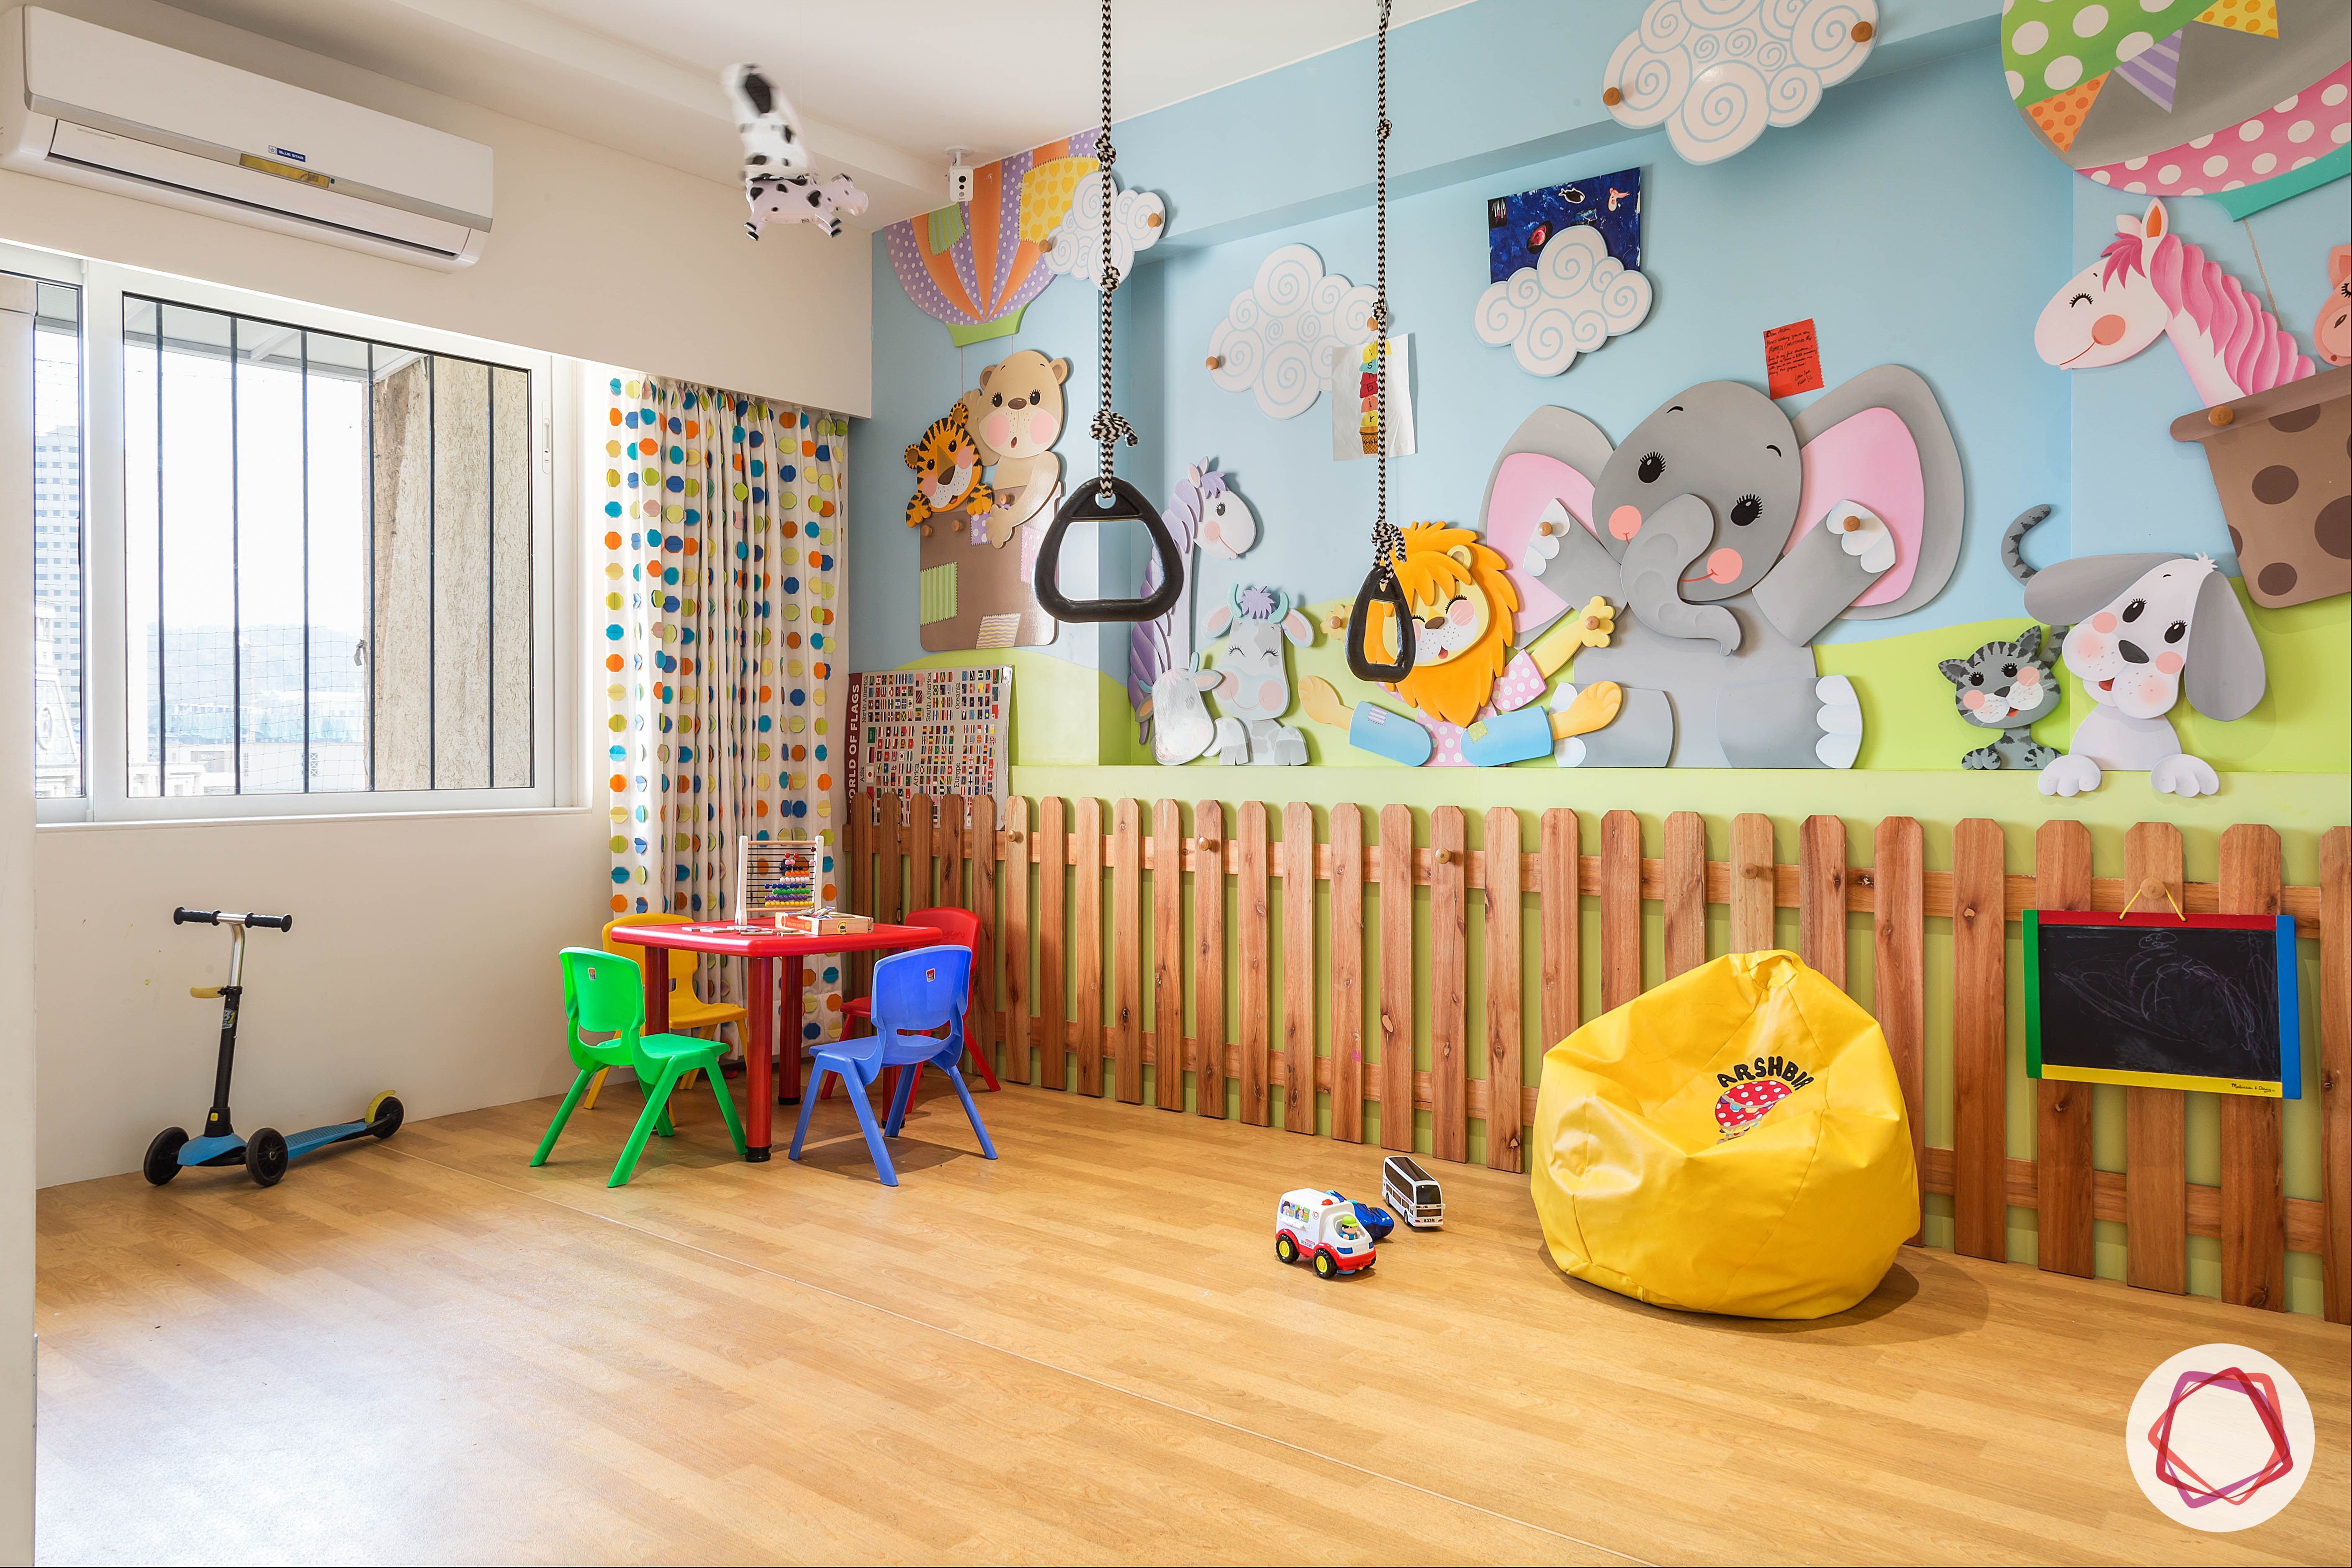 4bhk house plan-kids playroom ideas-kids playroom furniture-kids playroom designs-kids nursery designs-kids playroom decoration